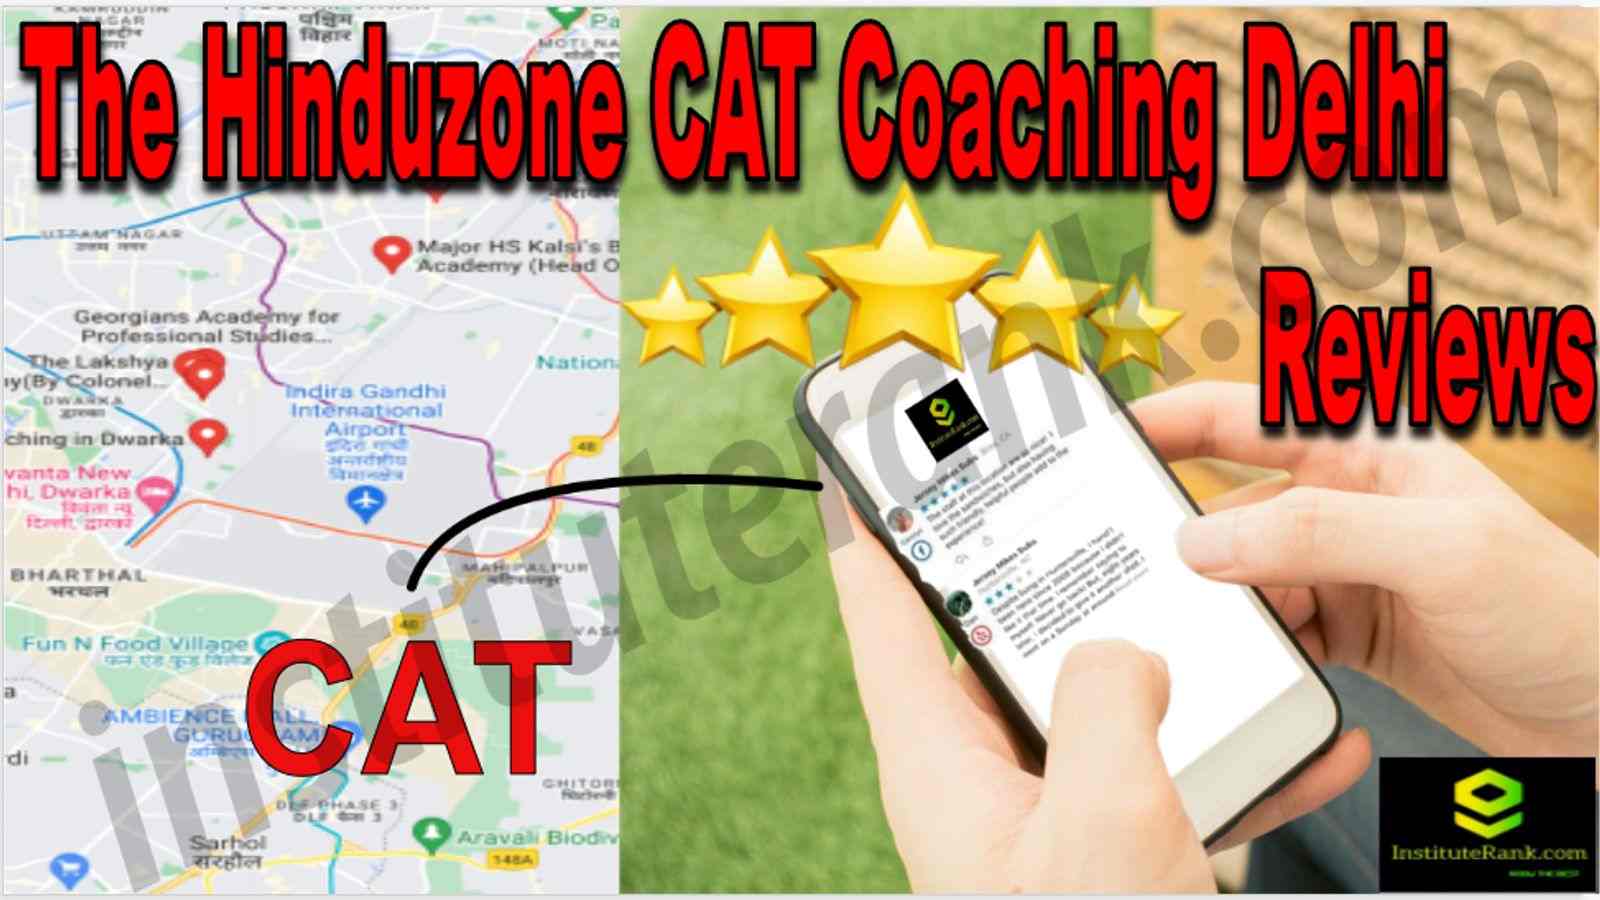 The Hinduzone CAT Coaching Delhi Reviews